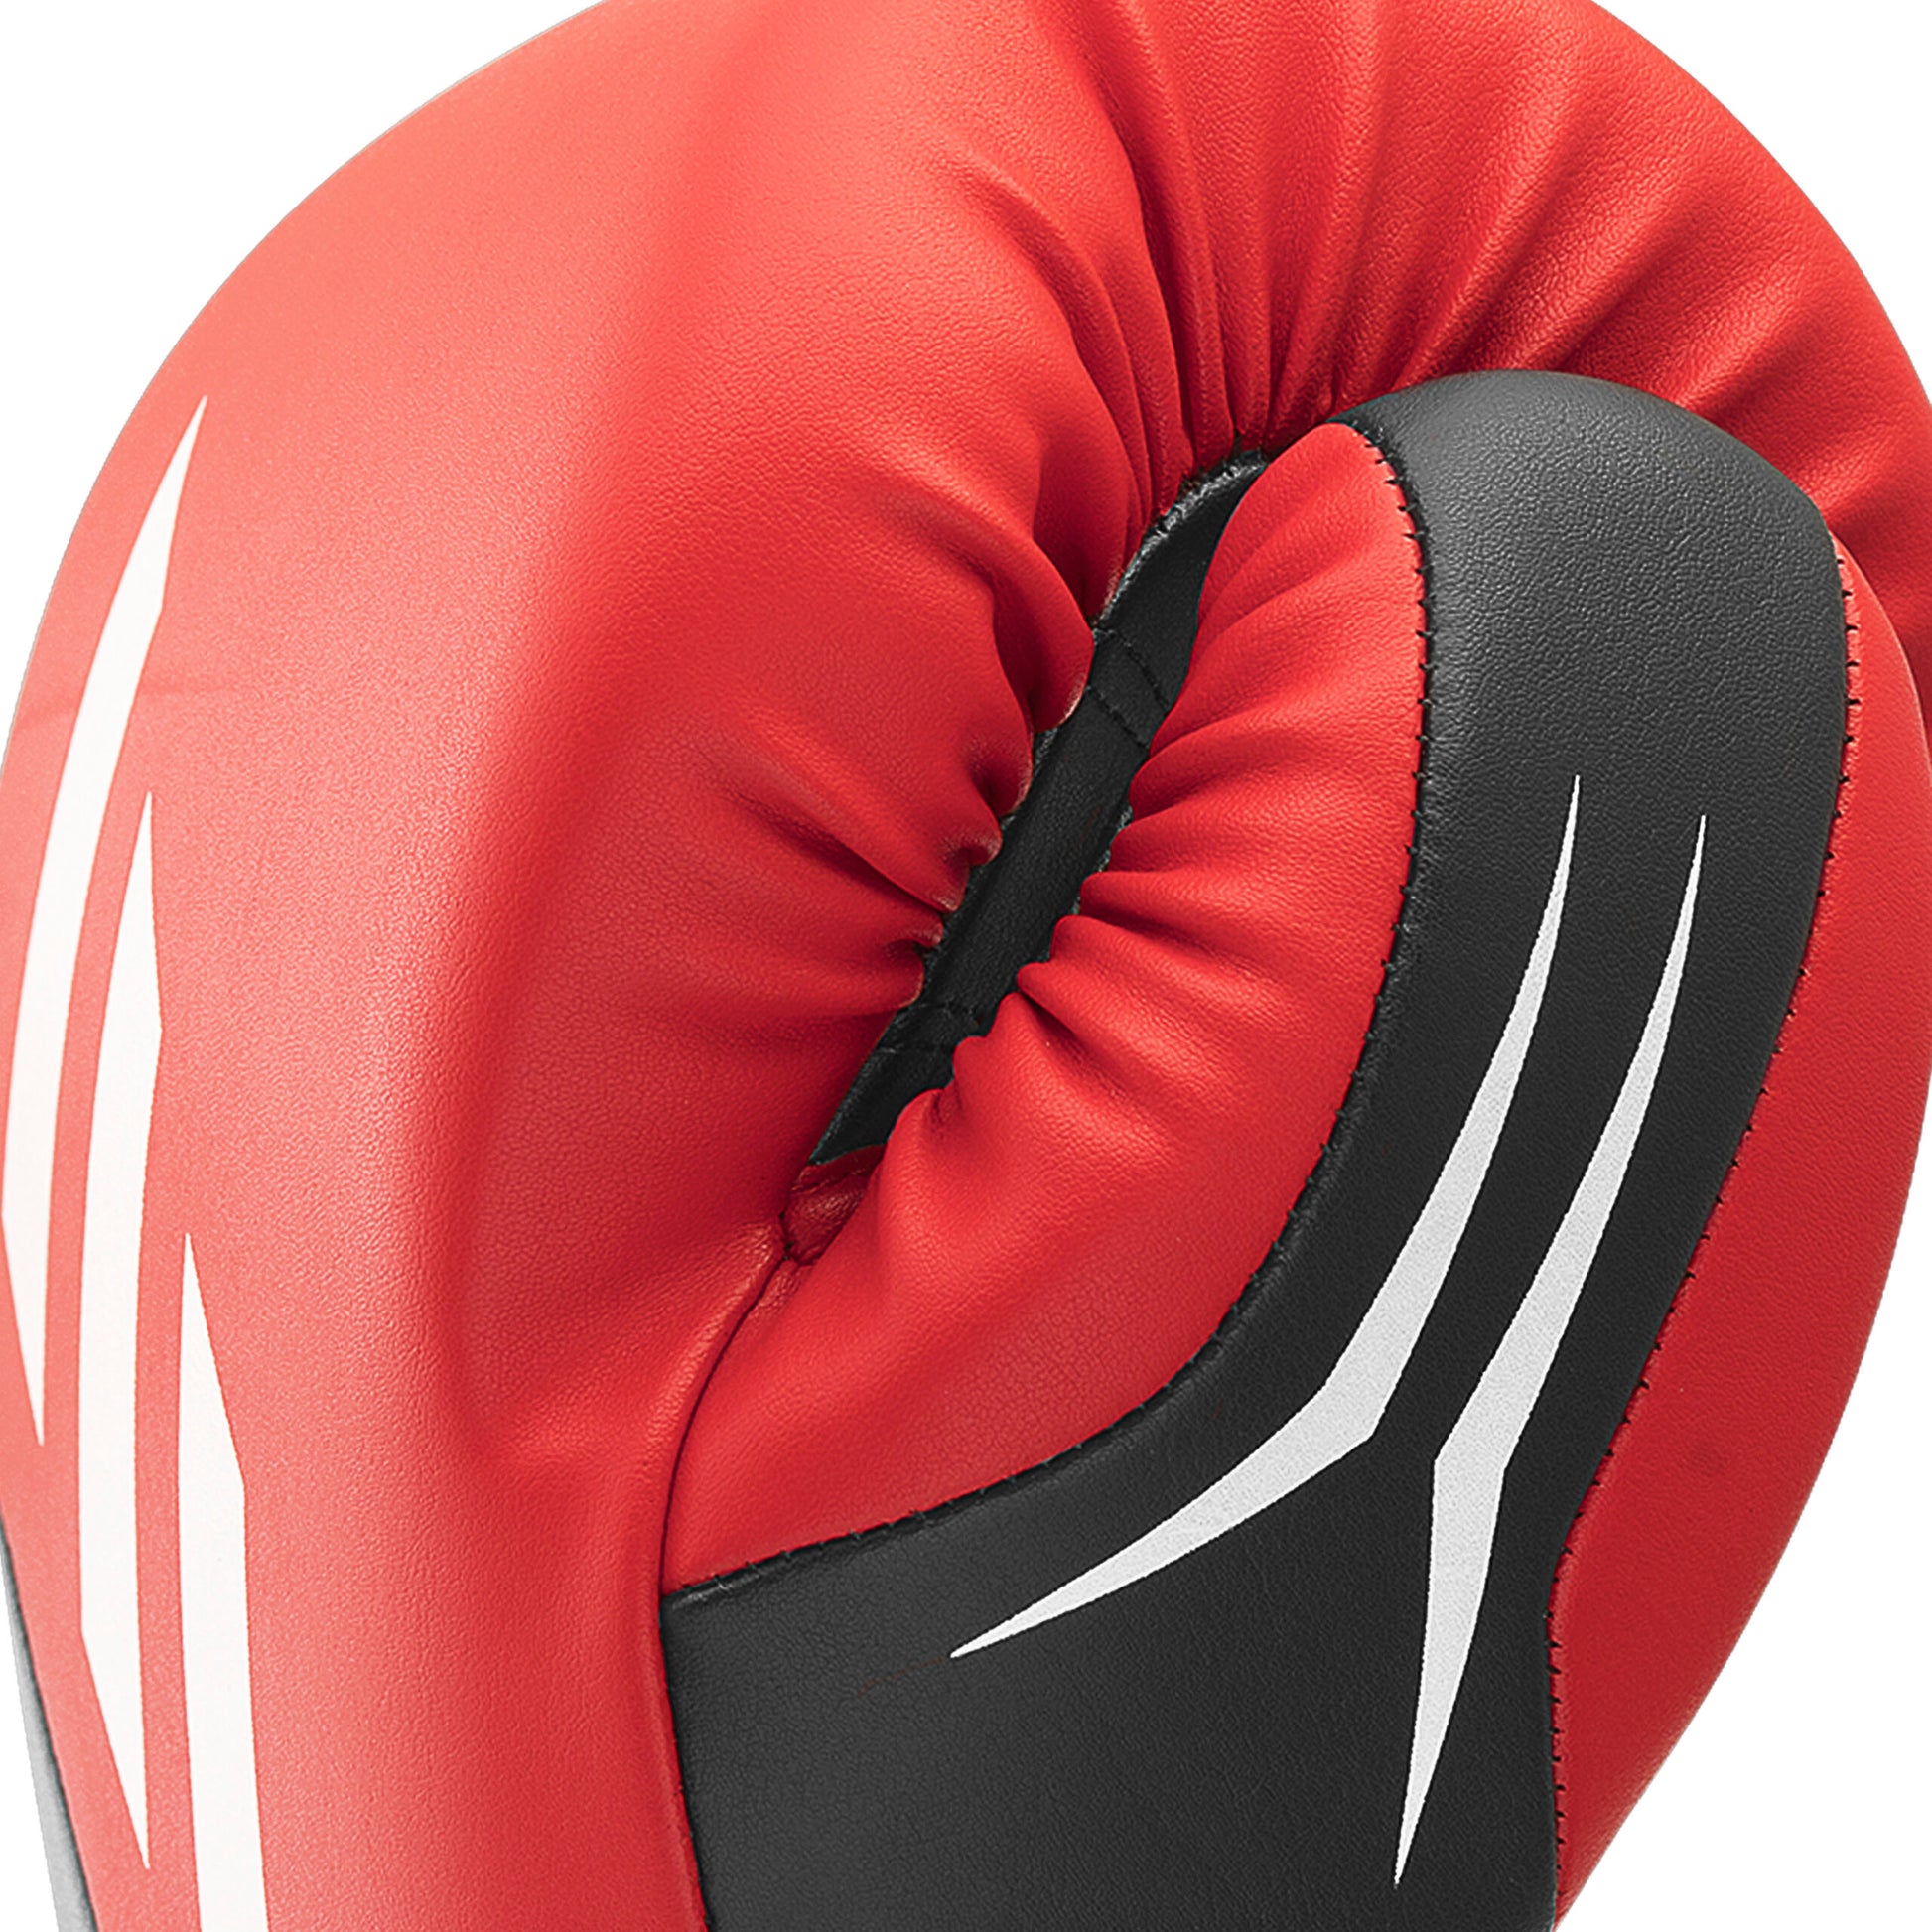 Adispd350tg Adidas Tilt 350 Pro Training Boxing Glove Strap Active Red Black 09